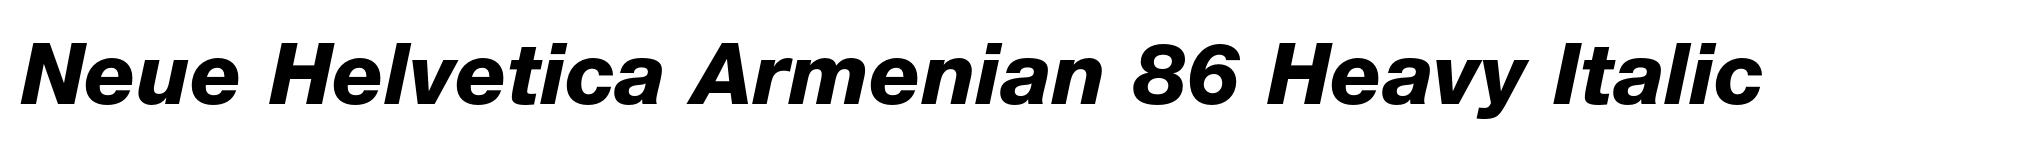 Neue Helvetica Armenian 86 Heavy Italic image